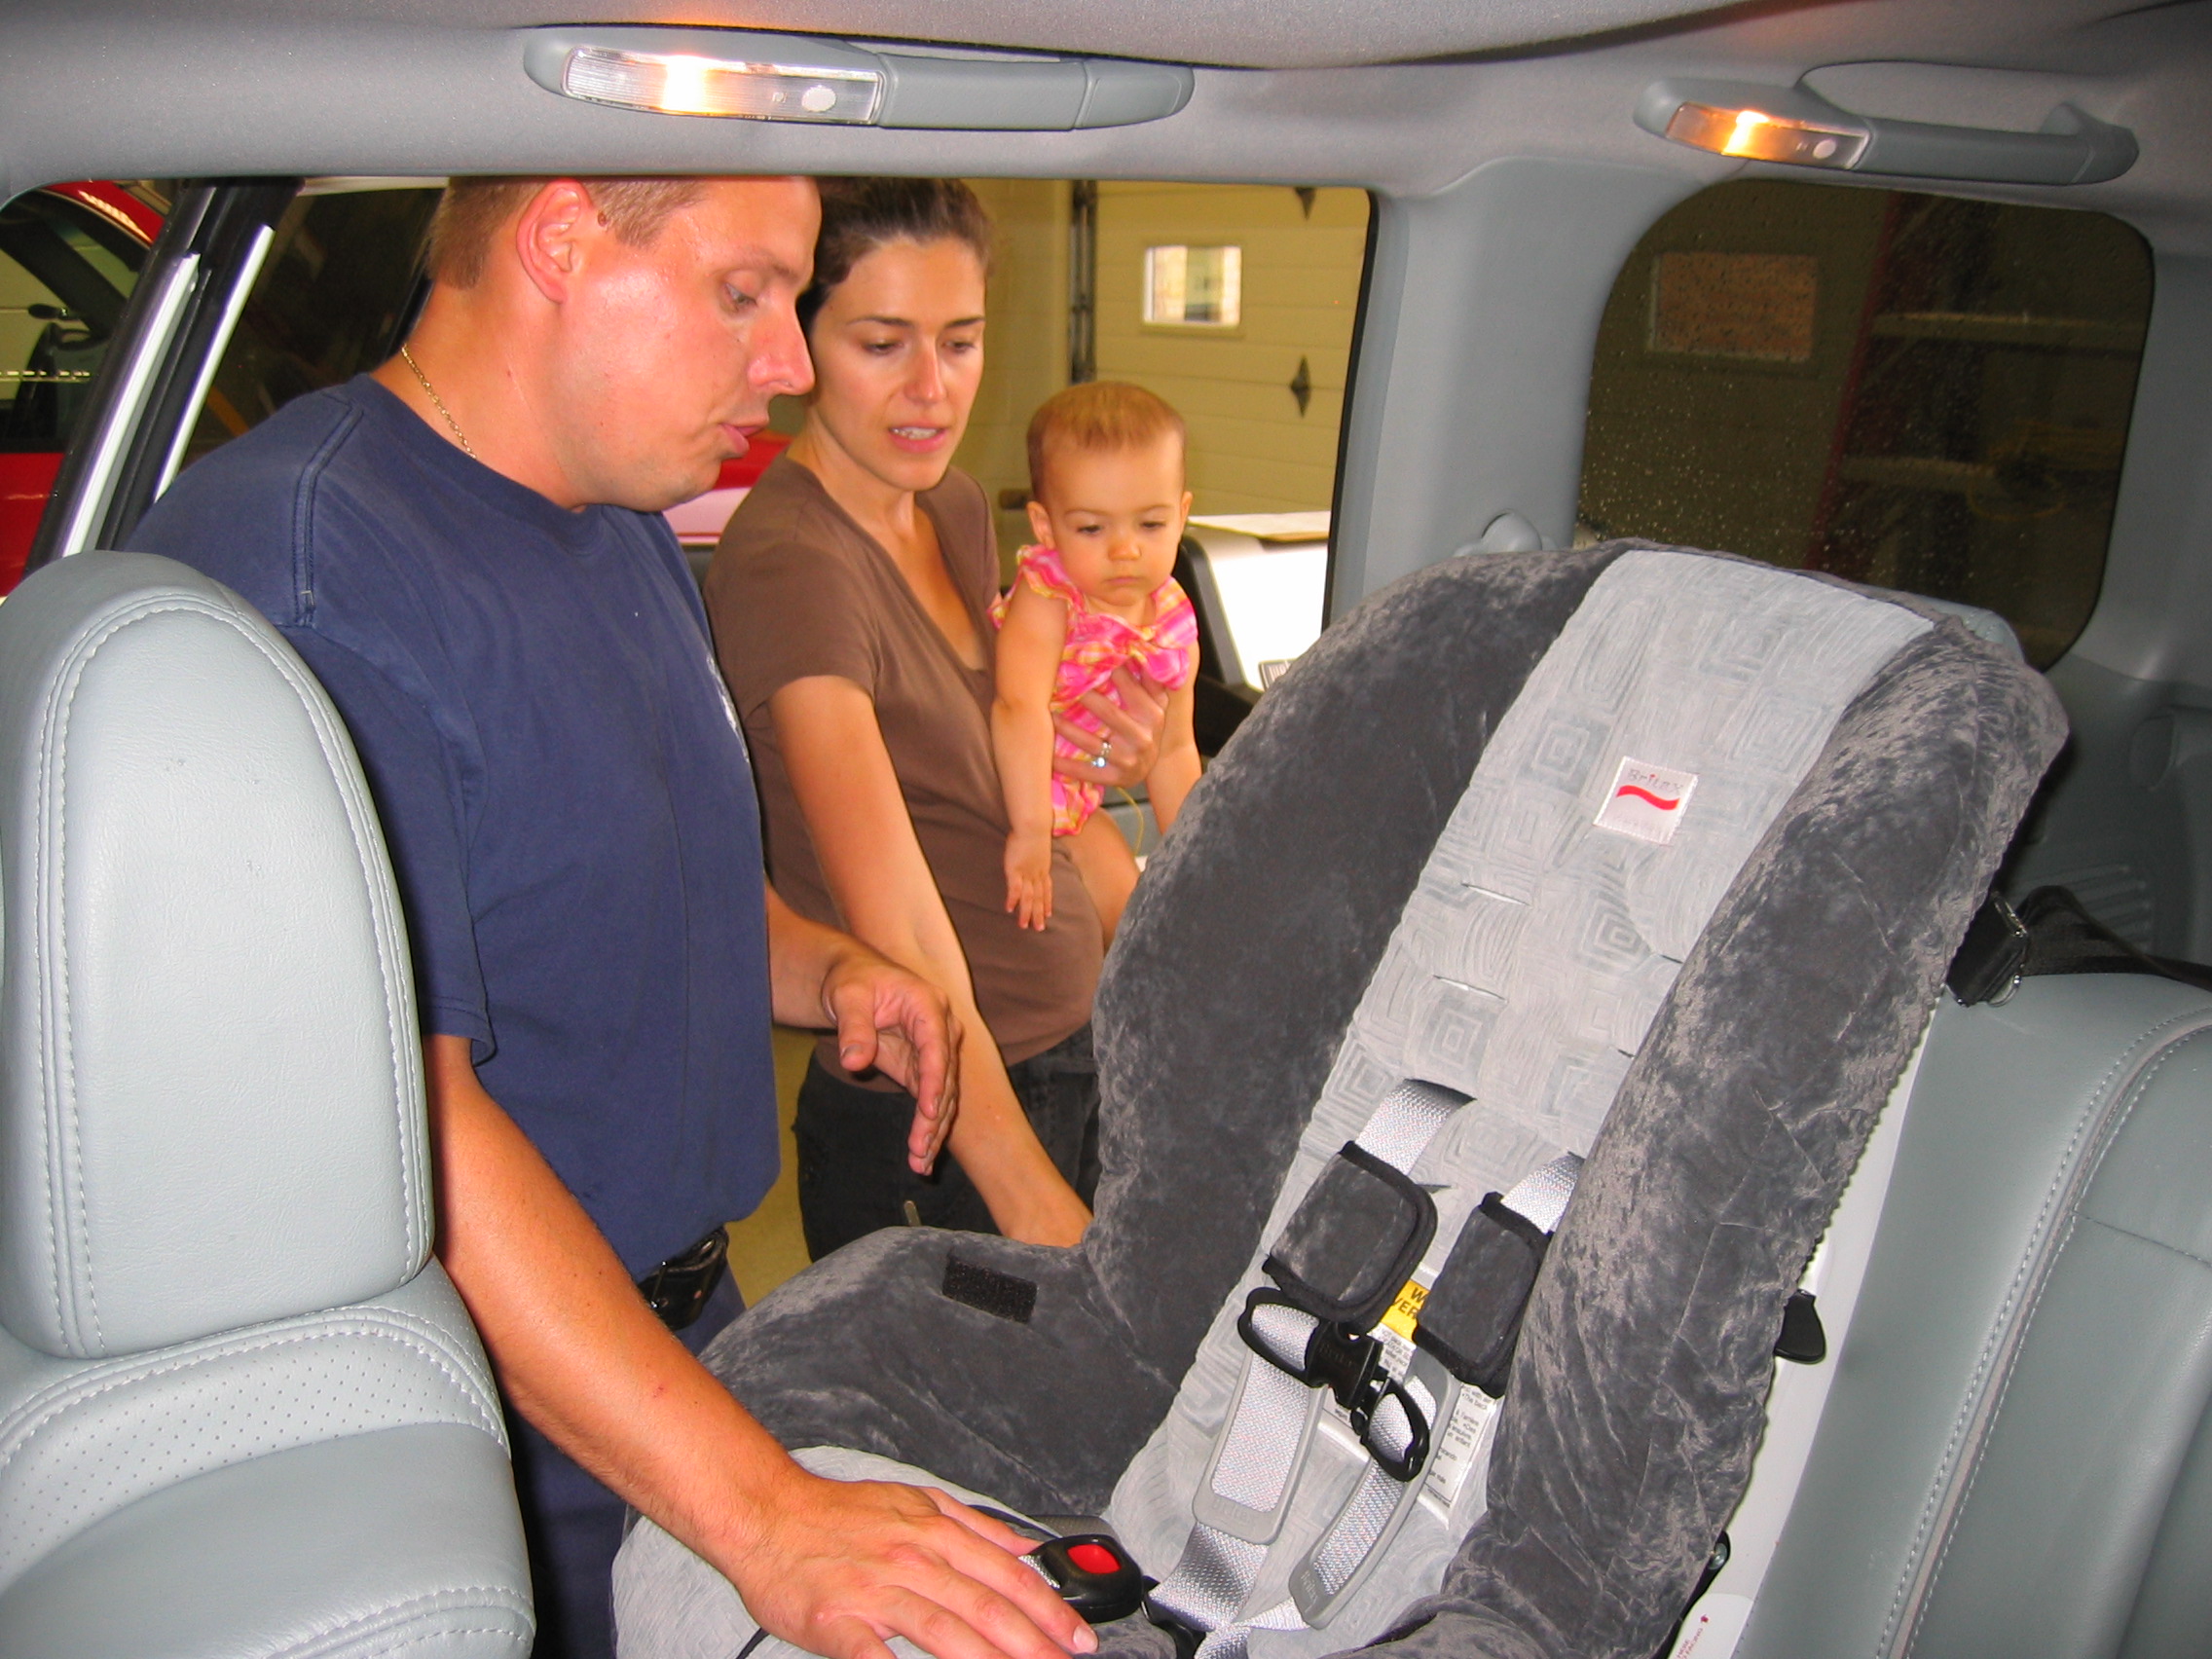 Firefighter/paramedic Michael Henkelman installs a child safety seat.